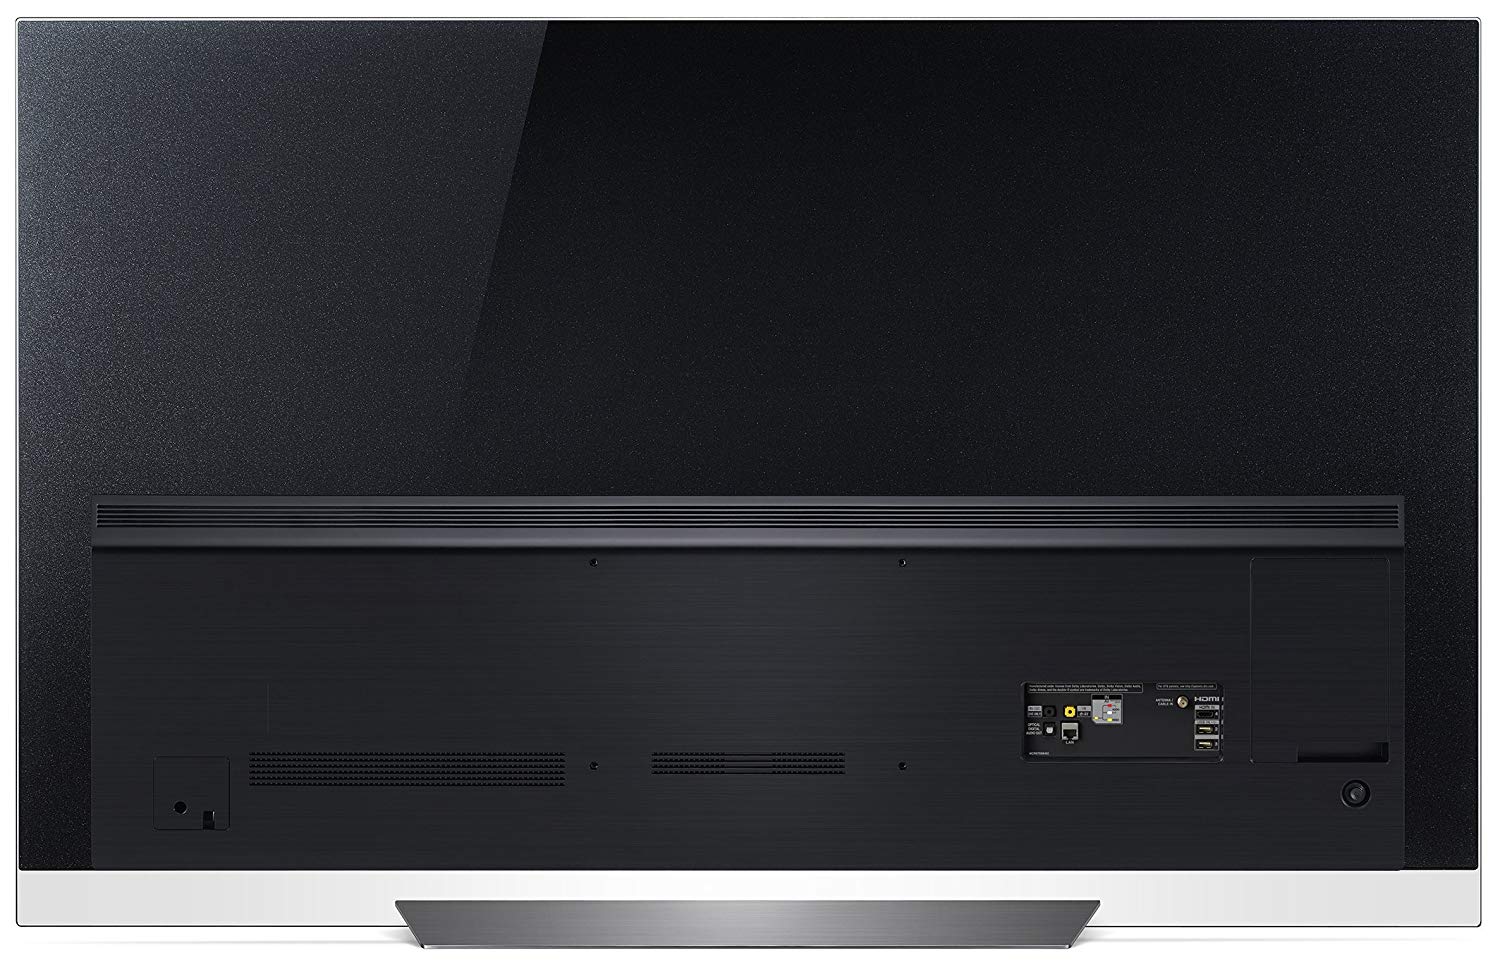 LG 65" Class OLED E8 Series 4K (2160P) Smart Ultra HD HDR TV - OLED65E8PUA - image 4 of 5